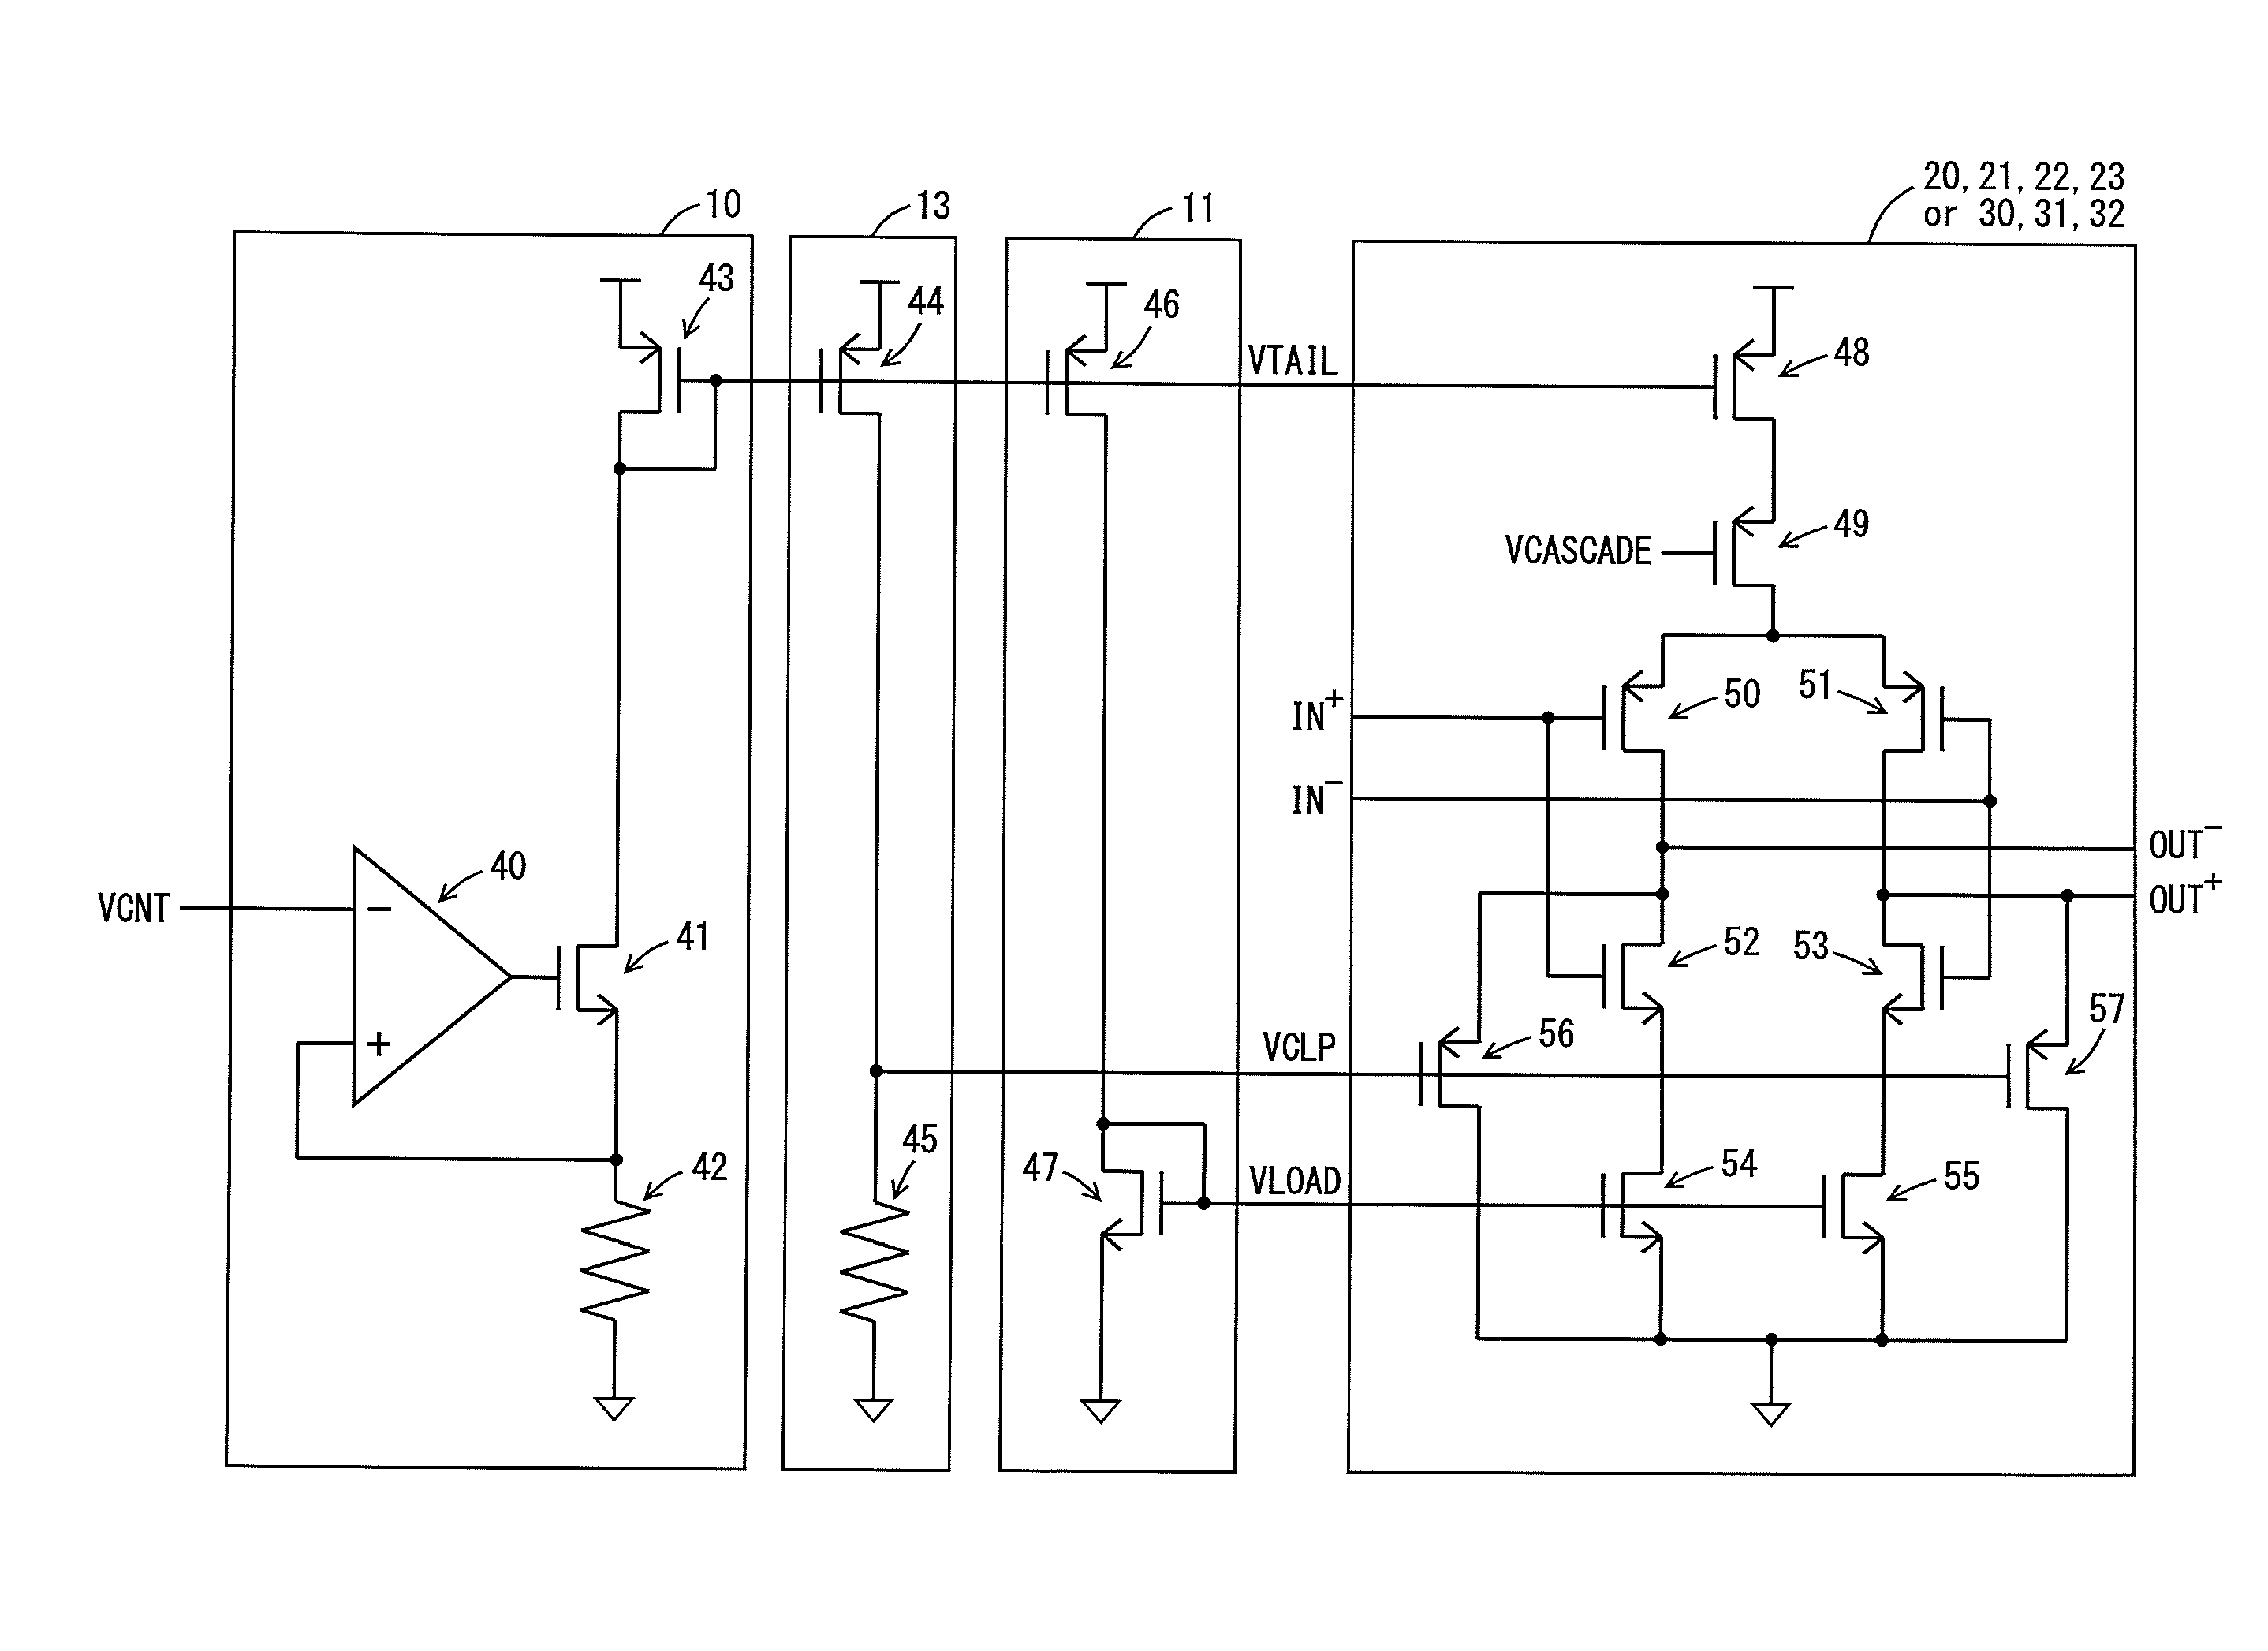 Differential ring oscillator-type voltage control oscillator